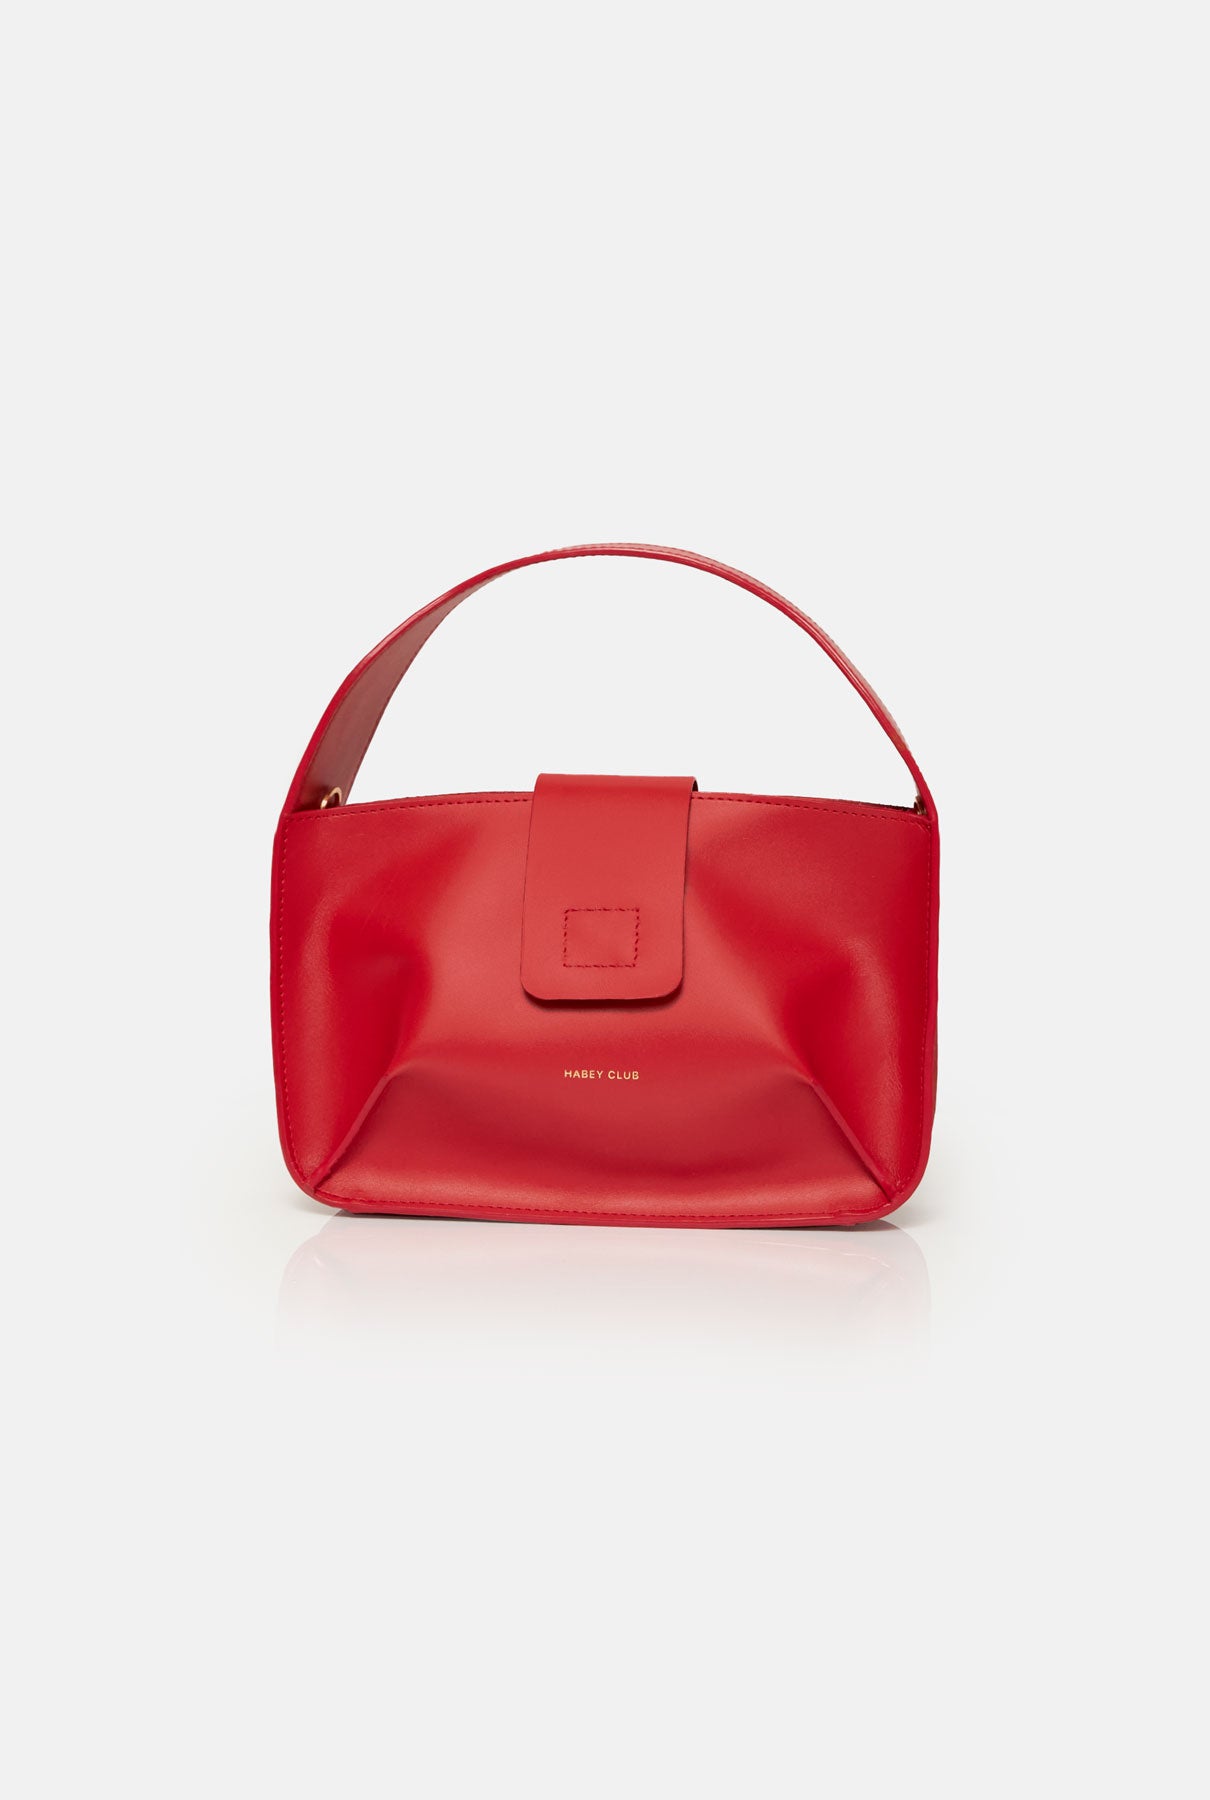 Red Bowl bag. Pre-Order bag Habey Club